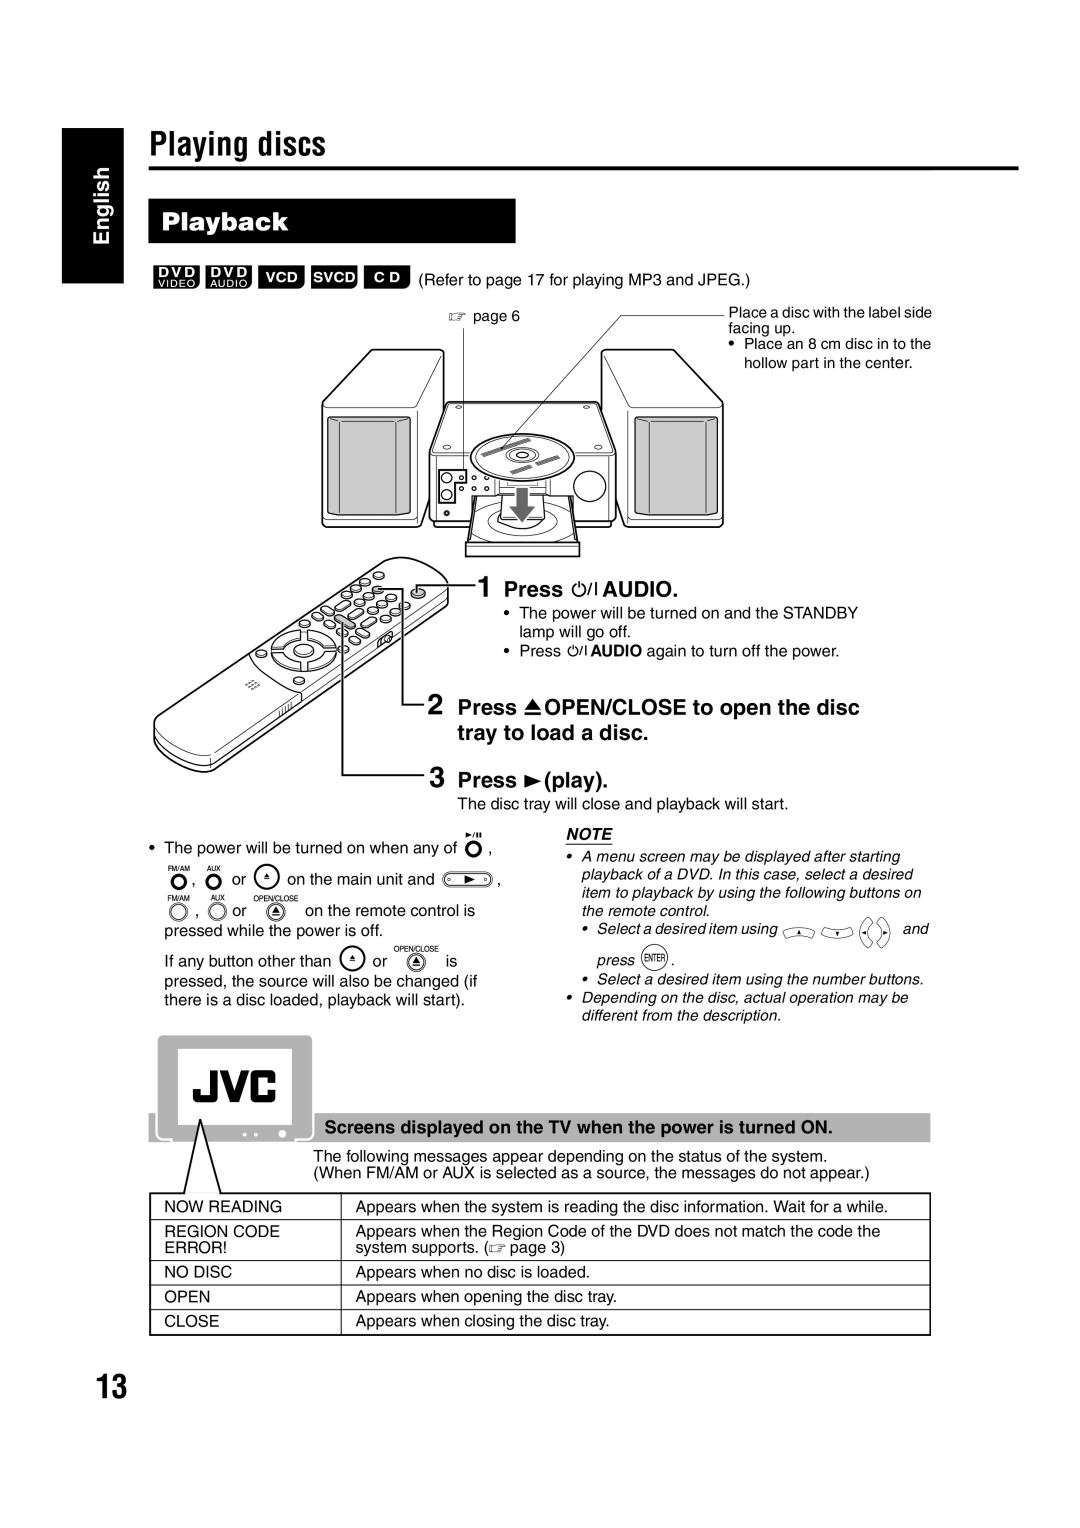 JVC EX-A1 manual Playing discs, Playback, English, Press FAUDIO, Press 3play 